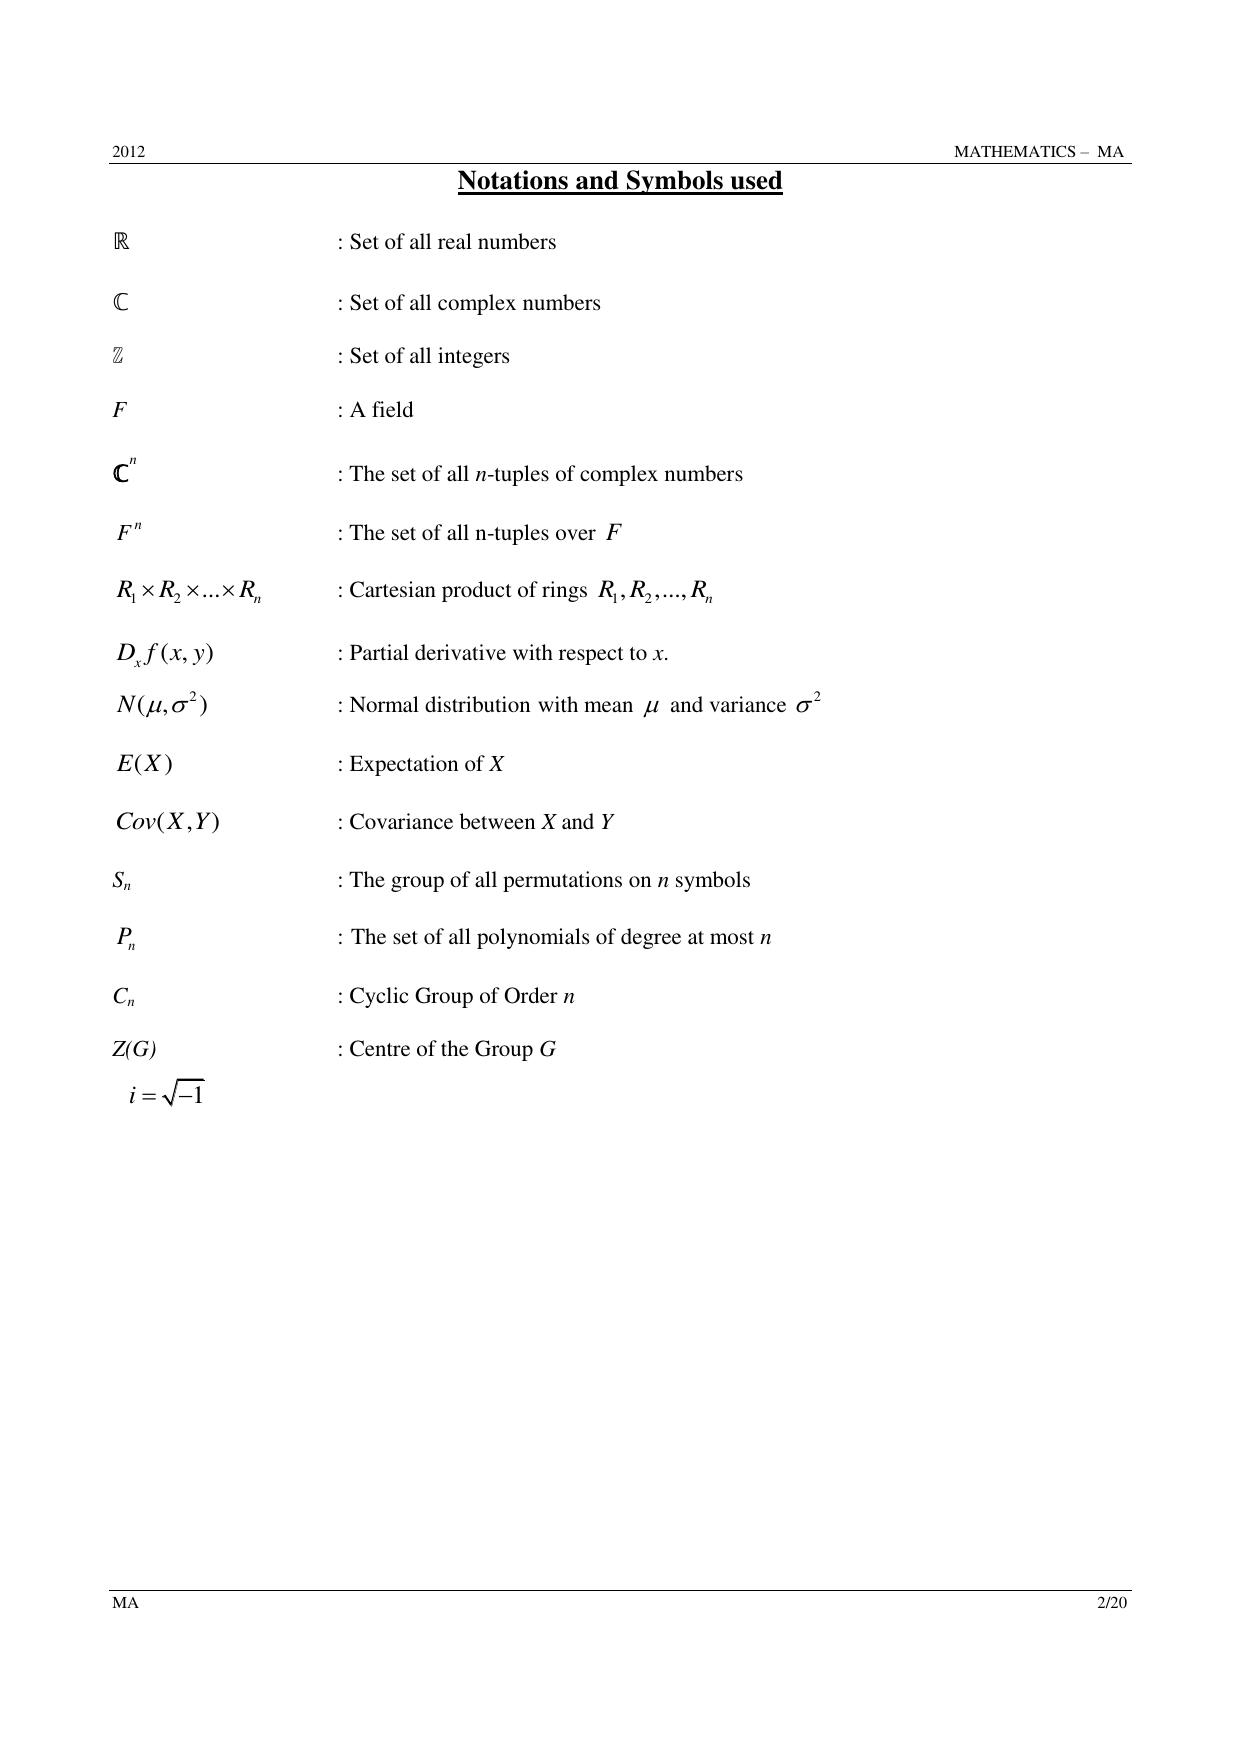 GATE 2012 Mathematics (MA) Question Paper with Answer Key - Page 2